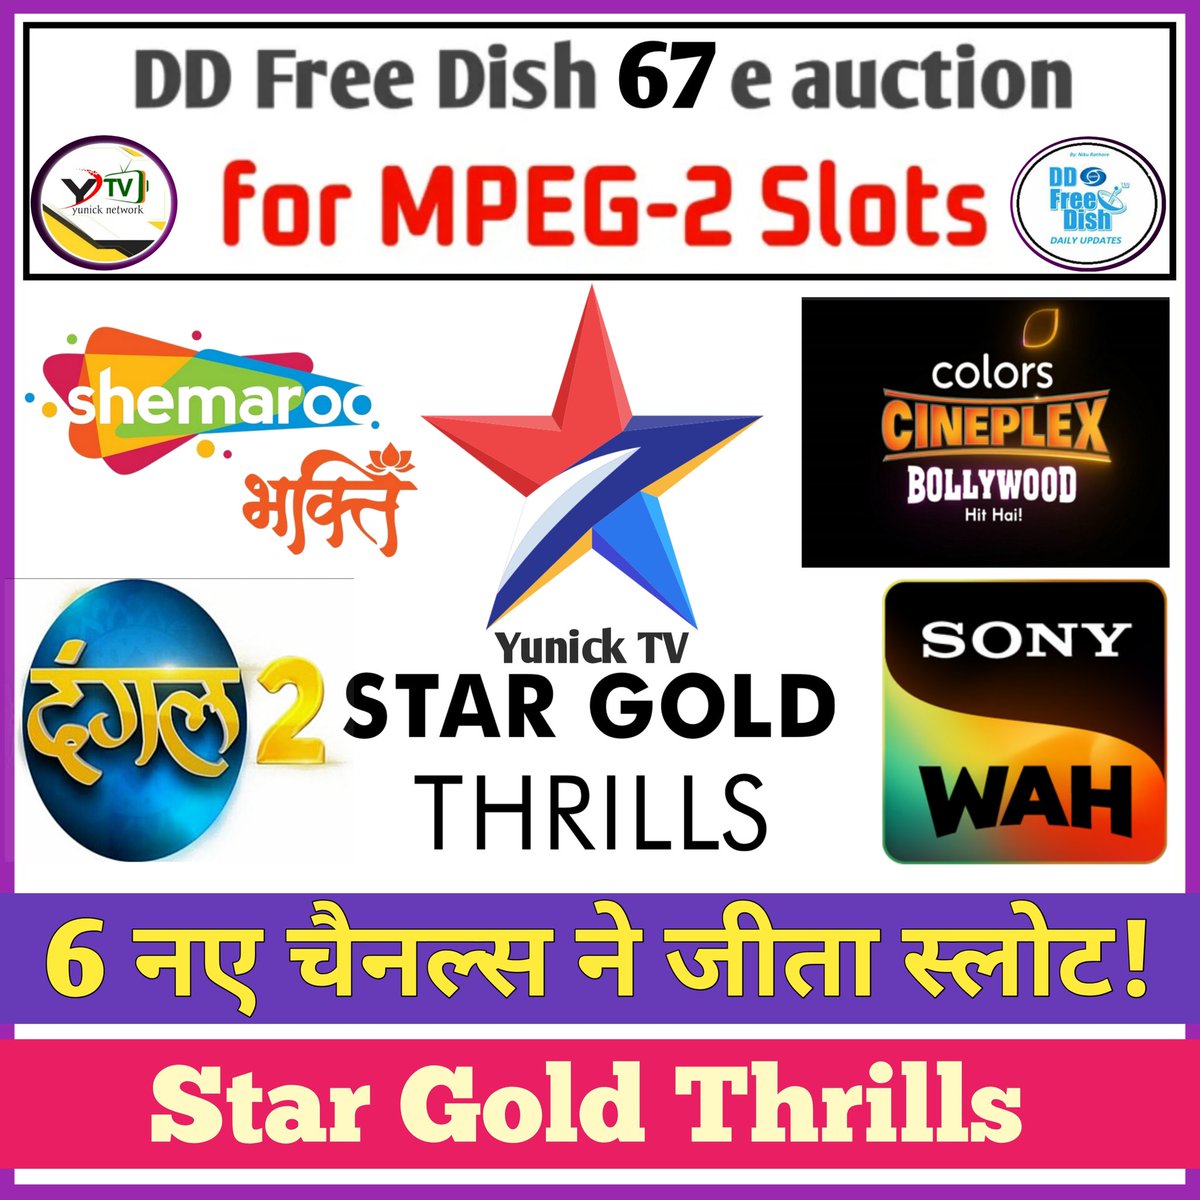 67th E-auction update!
6 New channels won slots!

1. #StarGoldThrills
2. #NazaraTV
3. #ShemarooBhakti
4. #Dangal2
5. #SonyWah
6. #ColorsCineplexBollywood

डीडी फ्री डिश की 67वी ई-नीलामी में 6 नए चैनल ने जीता स्लॉट।

#YunickTV
#67thE_auction
#DDFreeDish